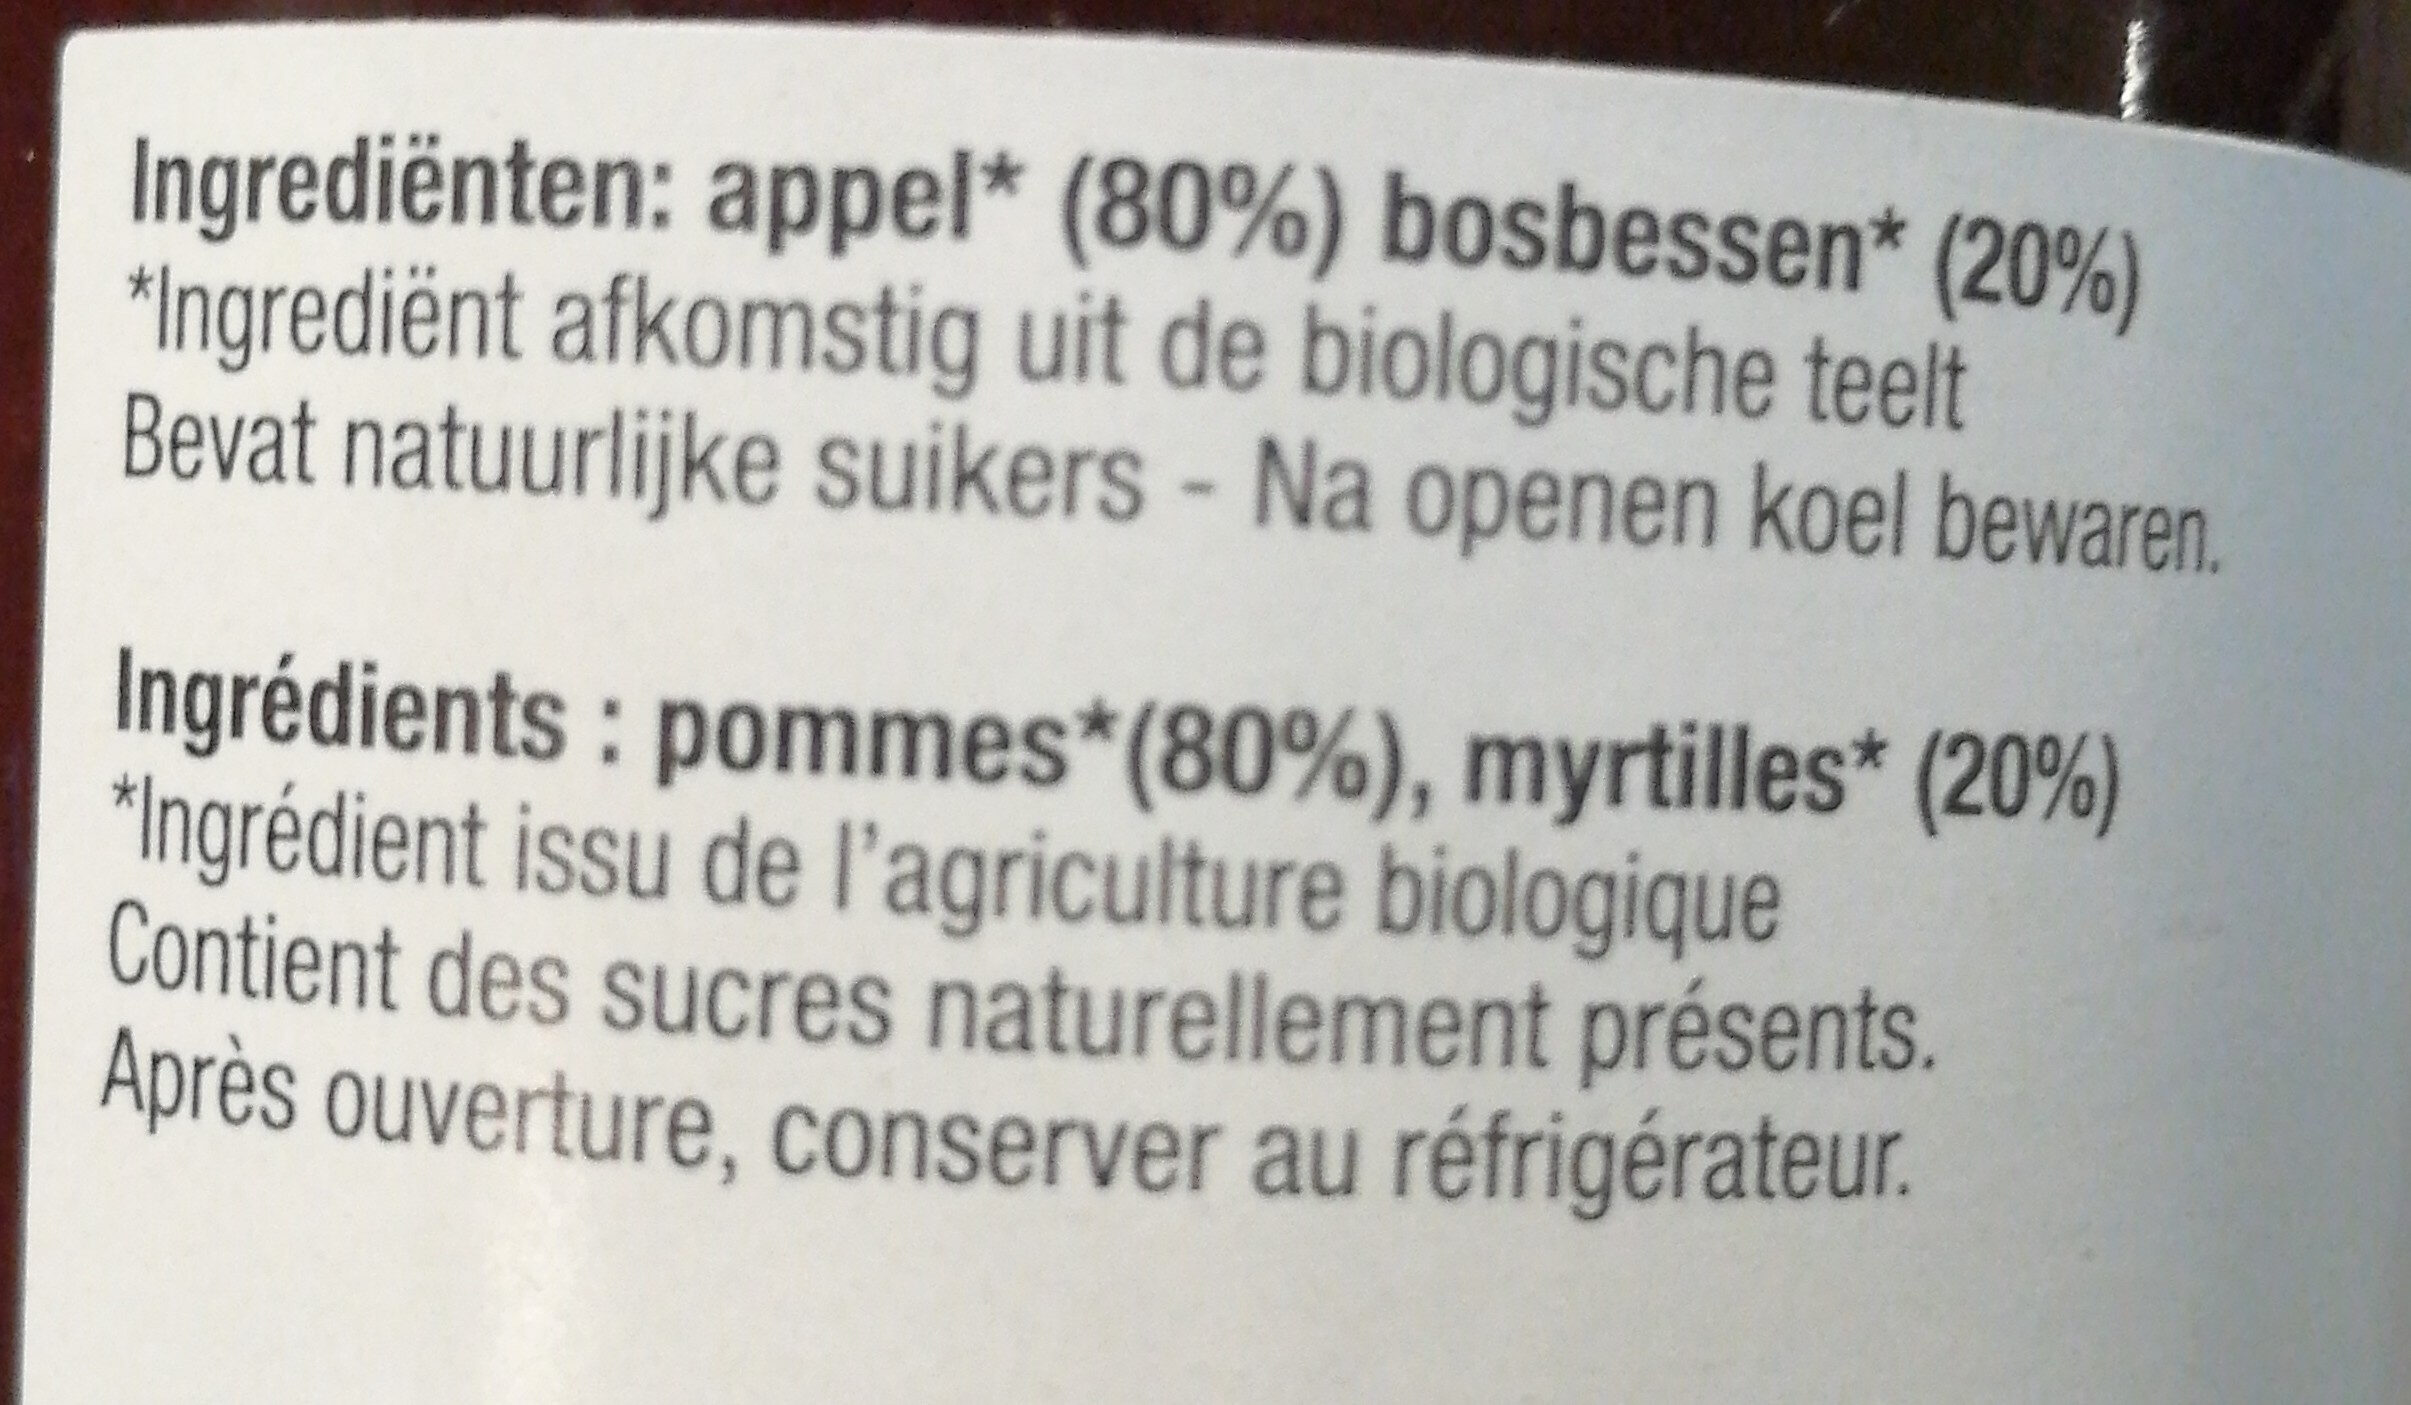 Puree pommes-Myrtilles - Ingrediënten - fr